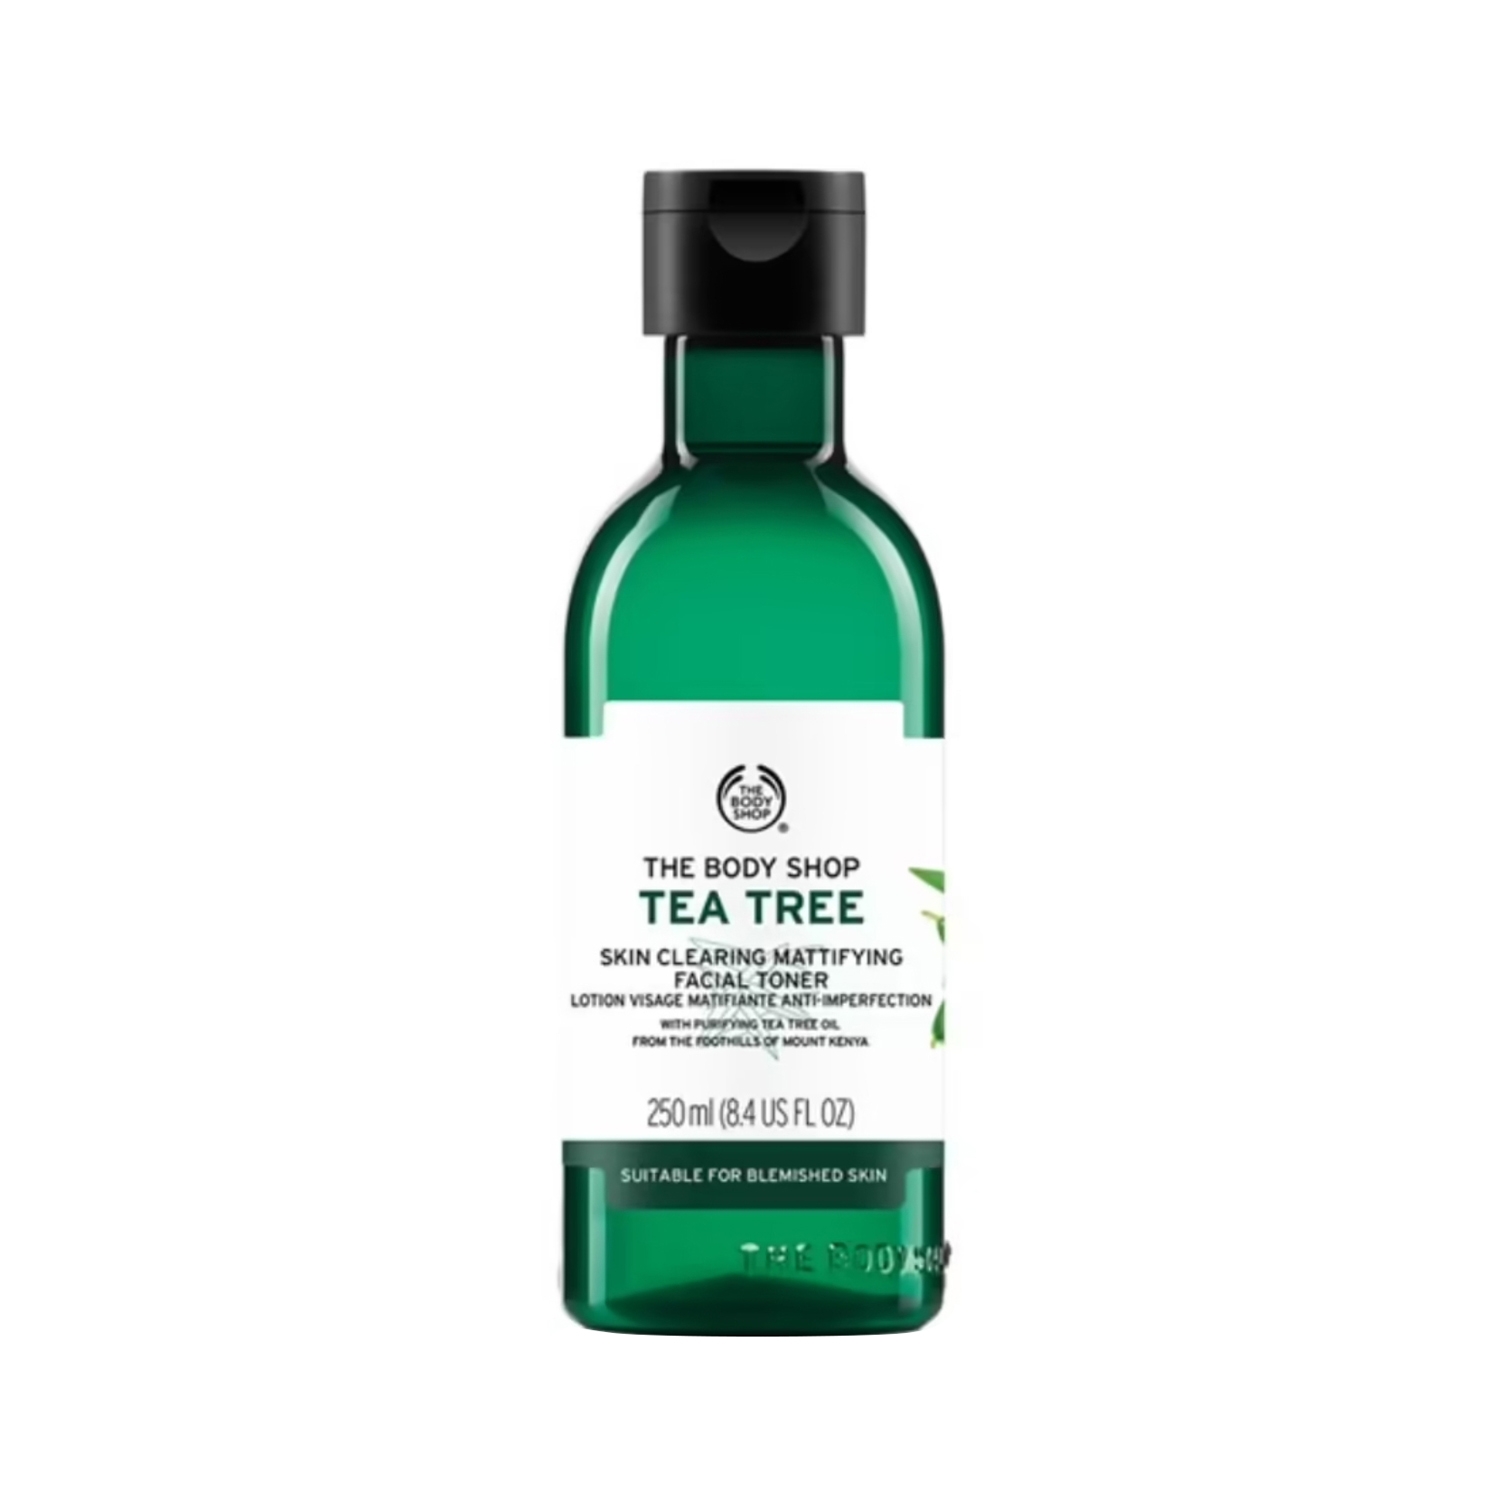 The Body Shop | The Body Shop Tea Tree Skin Clearing Mattifying Toner (250ml)